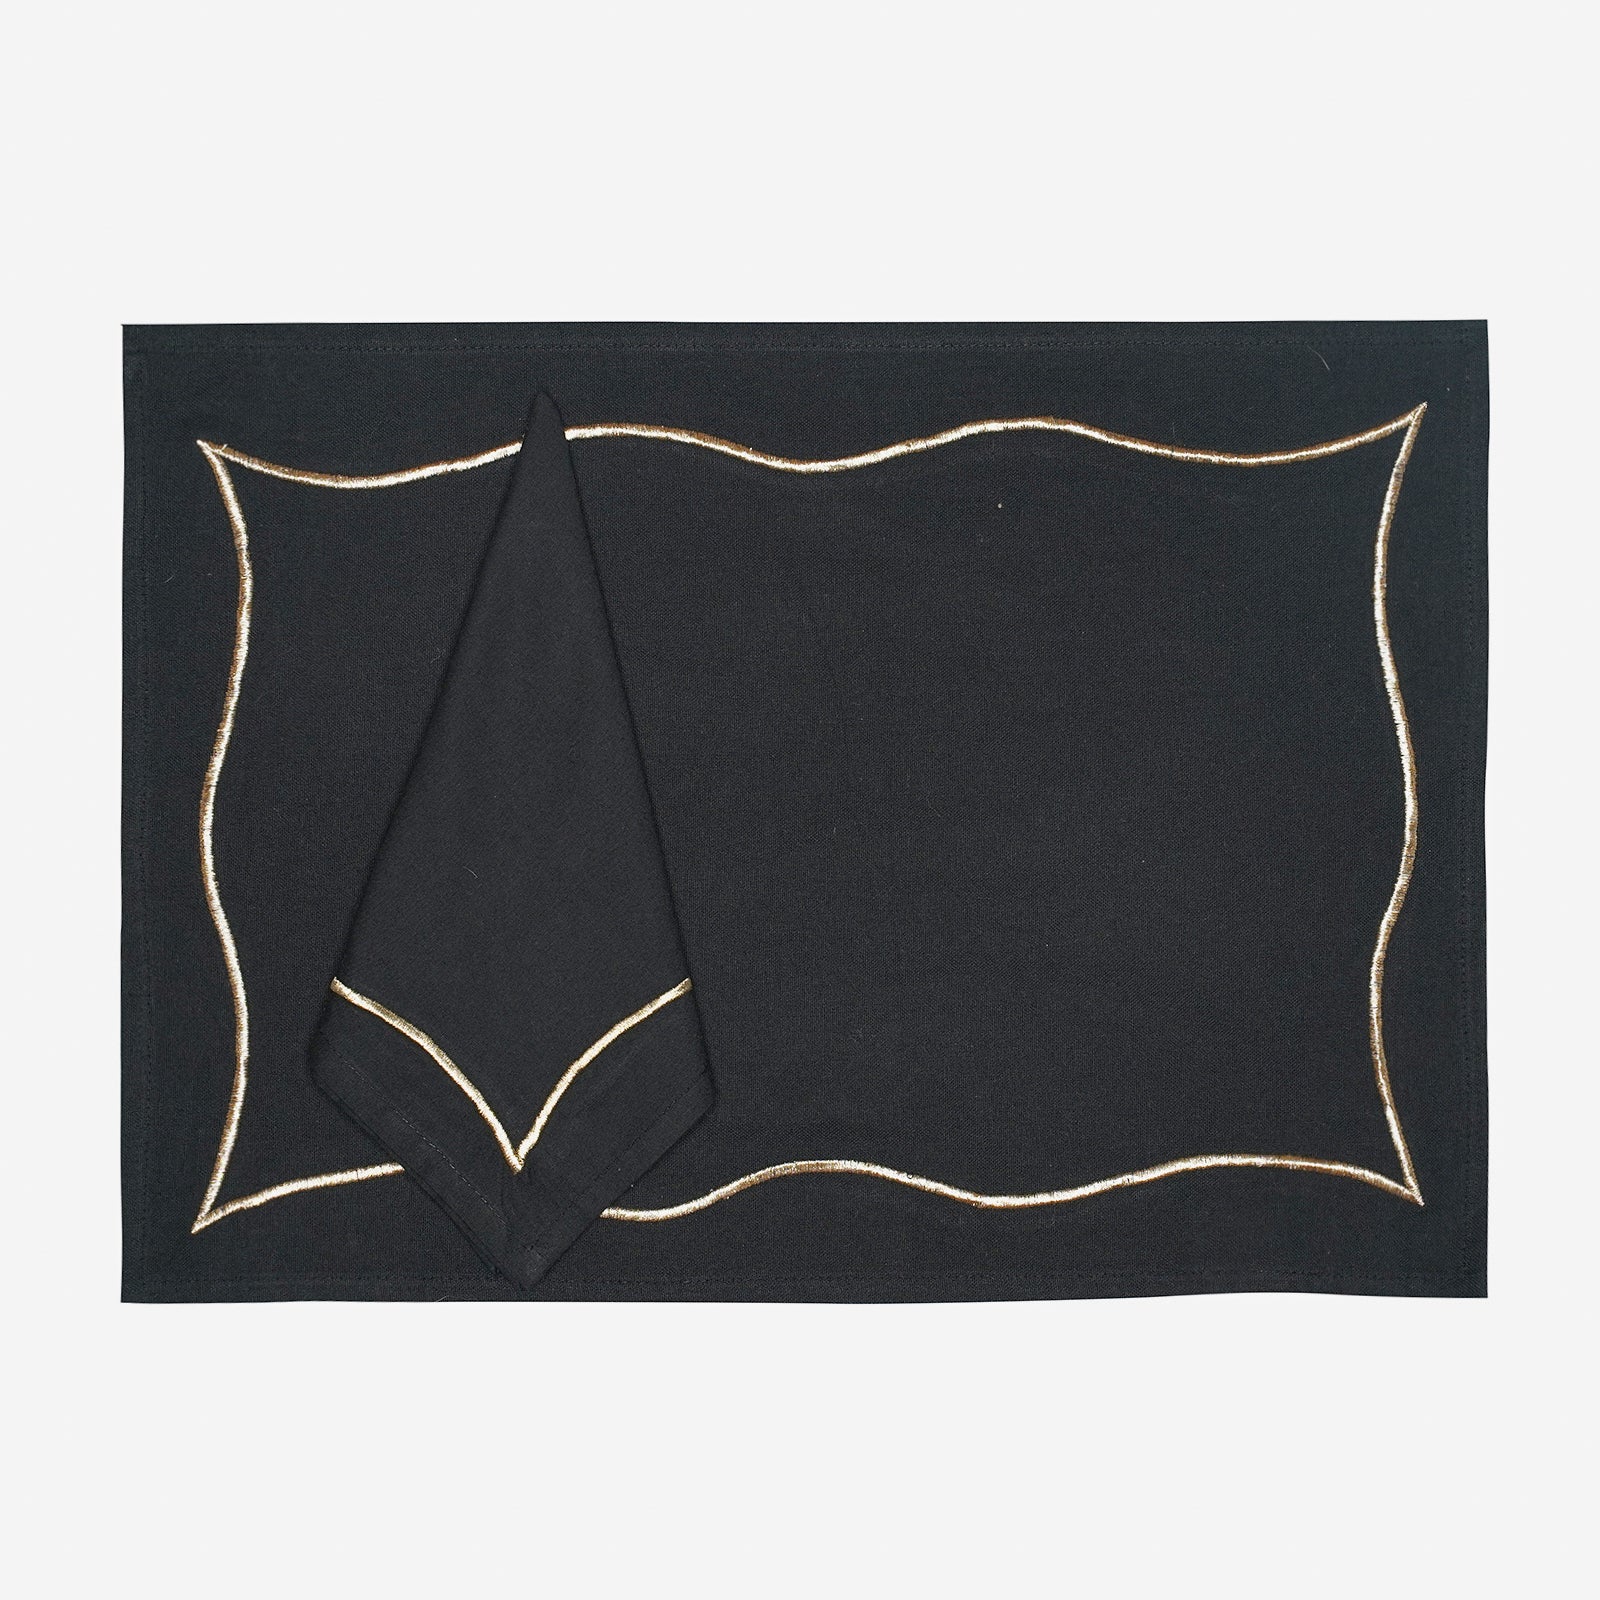 Scalloped Mat And Napkin (set of 6) - Vintage Scalloped Black